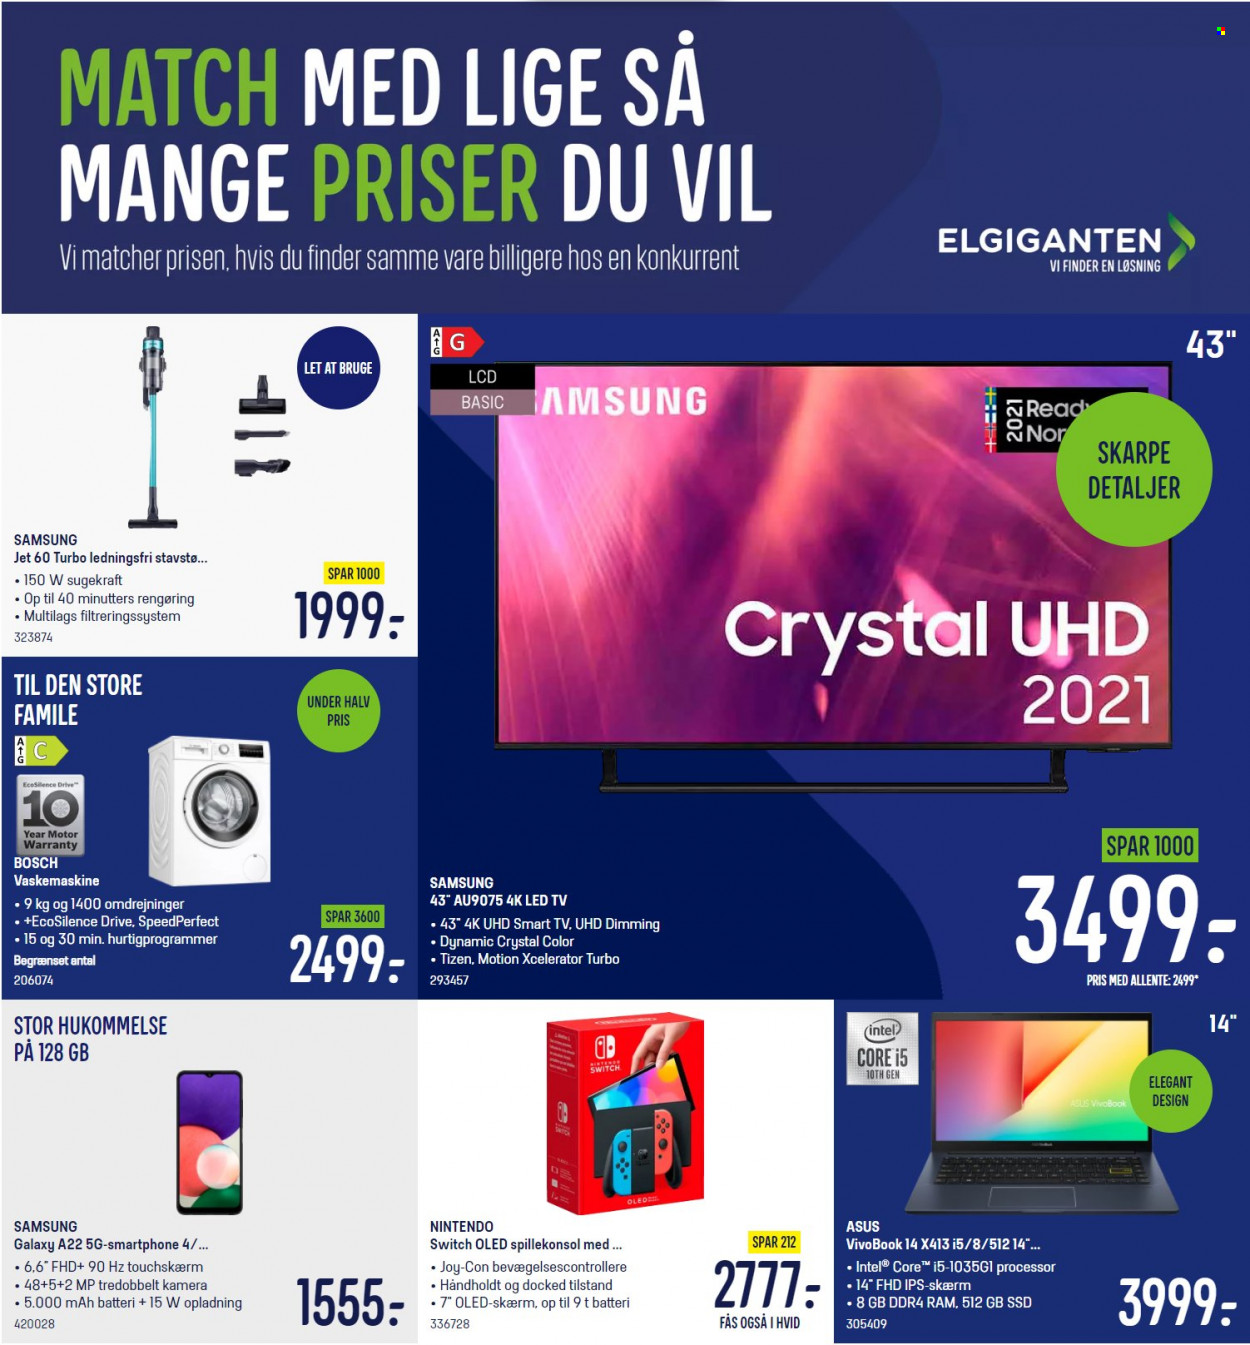 thumbnail - Elgiganten tilbud  - 23.5.2022 - 29.5.2022 - tilbudsprodukter - Bosch, LED TV, Smart TV, vaskemaskiner, Samsung Galaxy, Asus, Nintendo. Side 1.